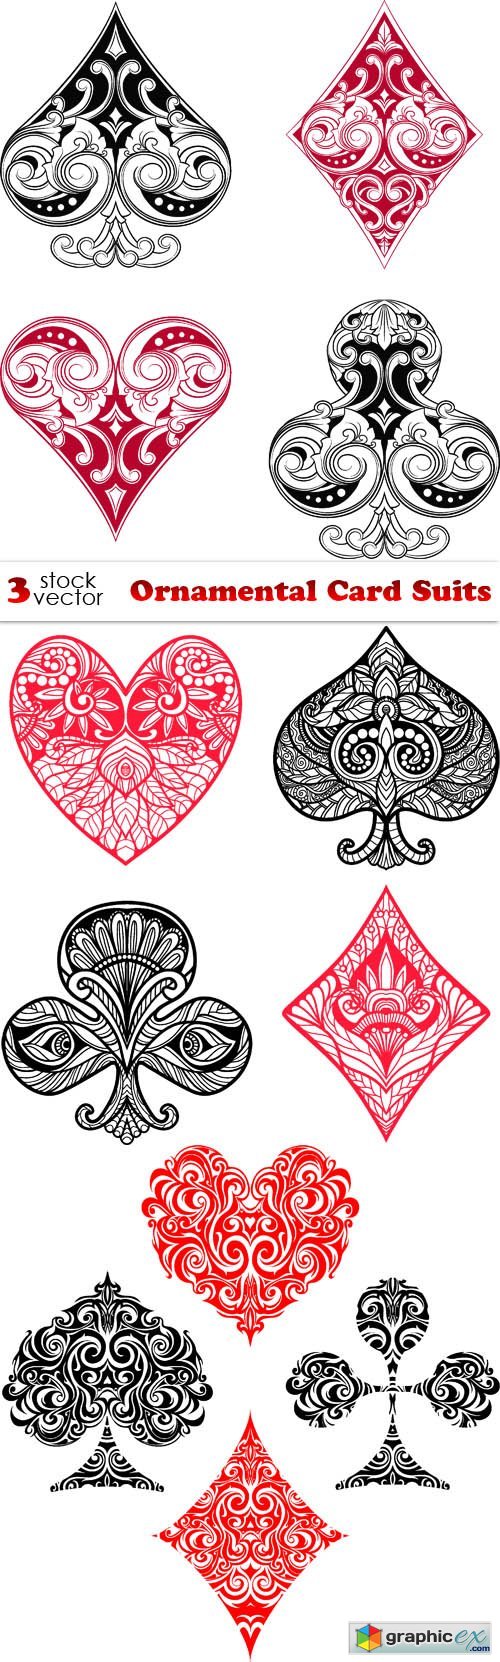 Ornamental Card Suits